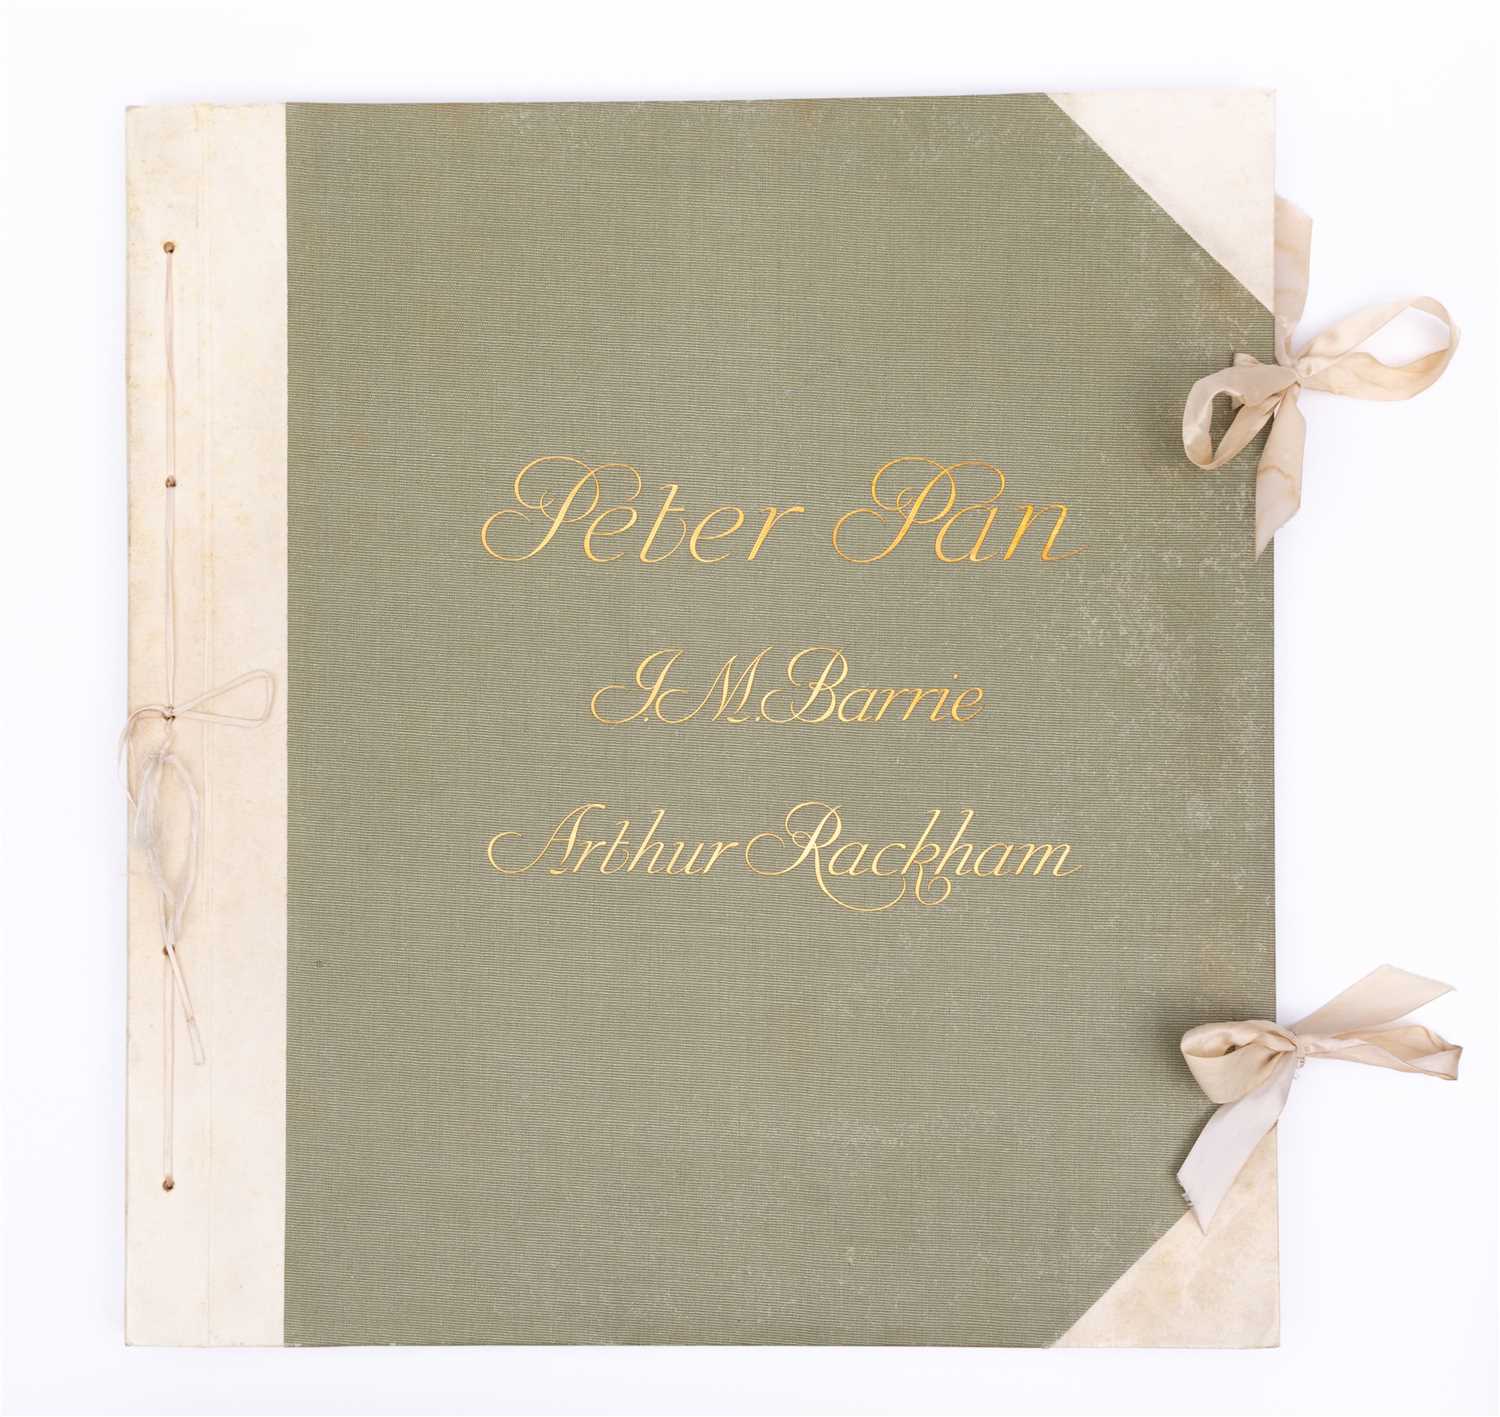 Lot 354 - Rackham, Arthur (illust.), The Peter Pan Portfolio ... from 'Peter Pan in Kensington Gardens'